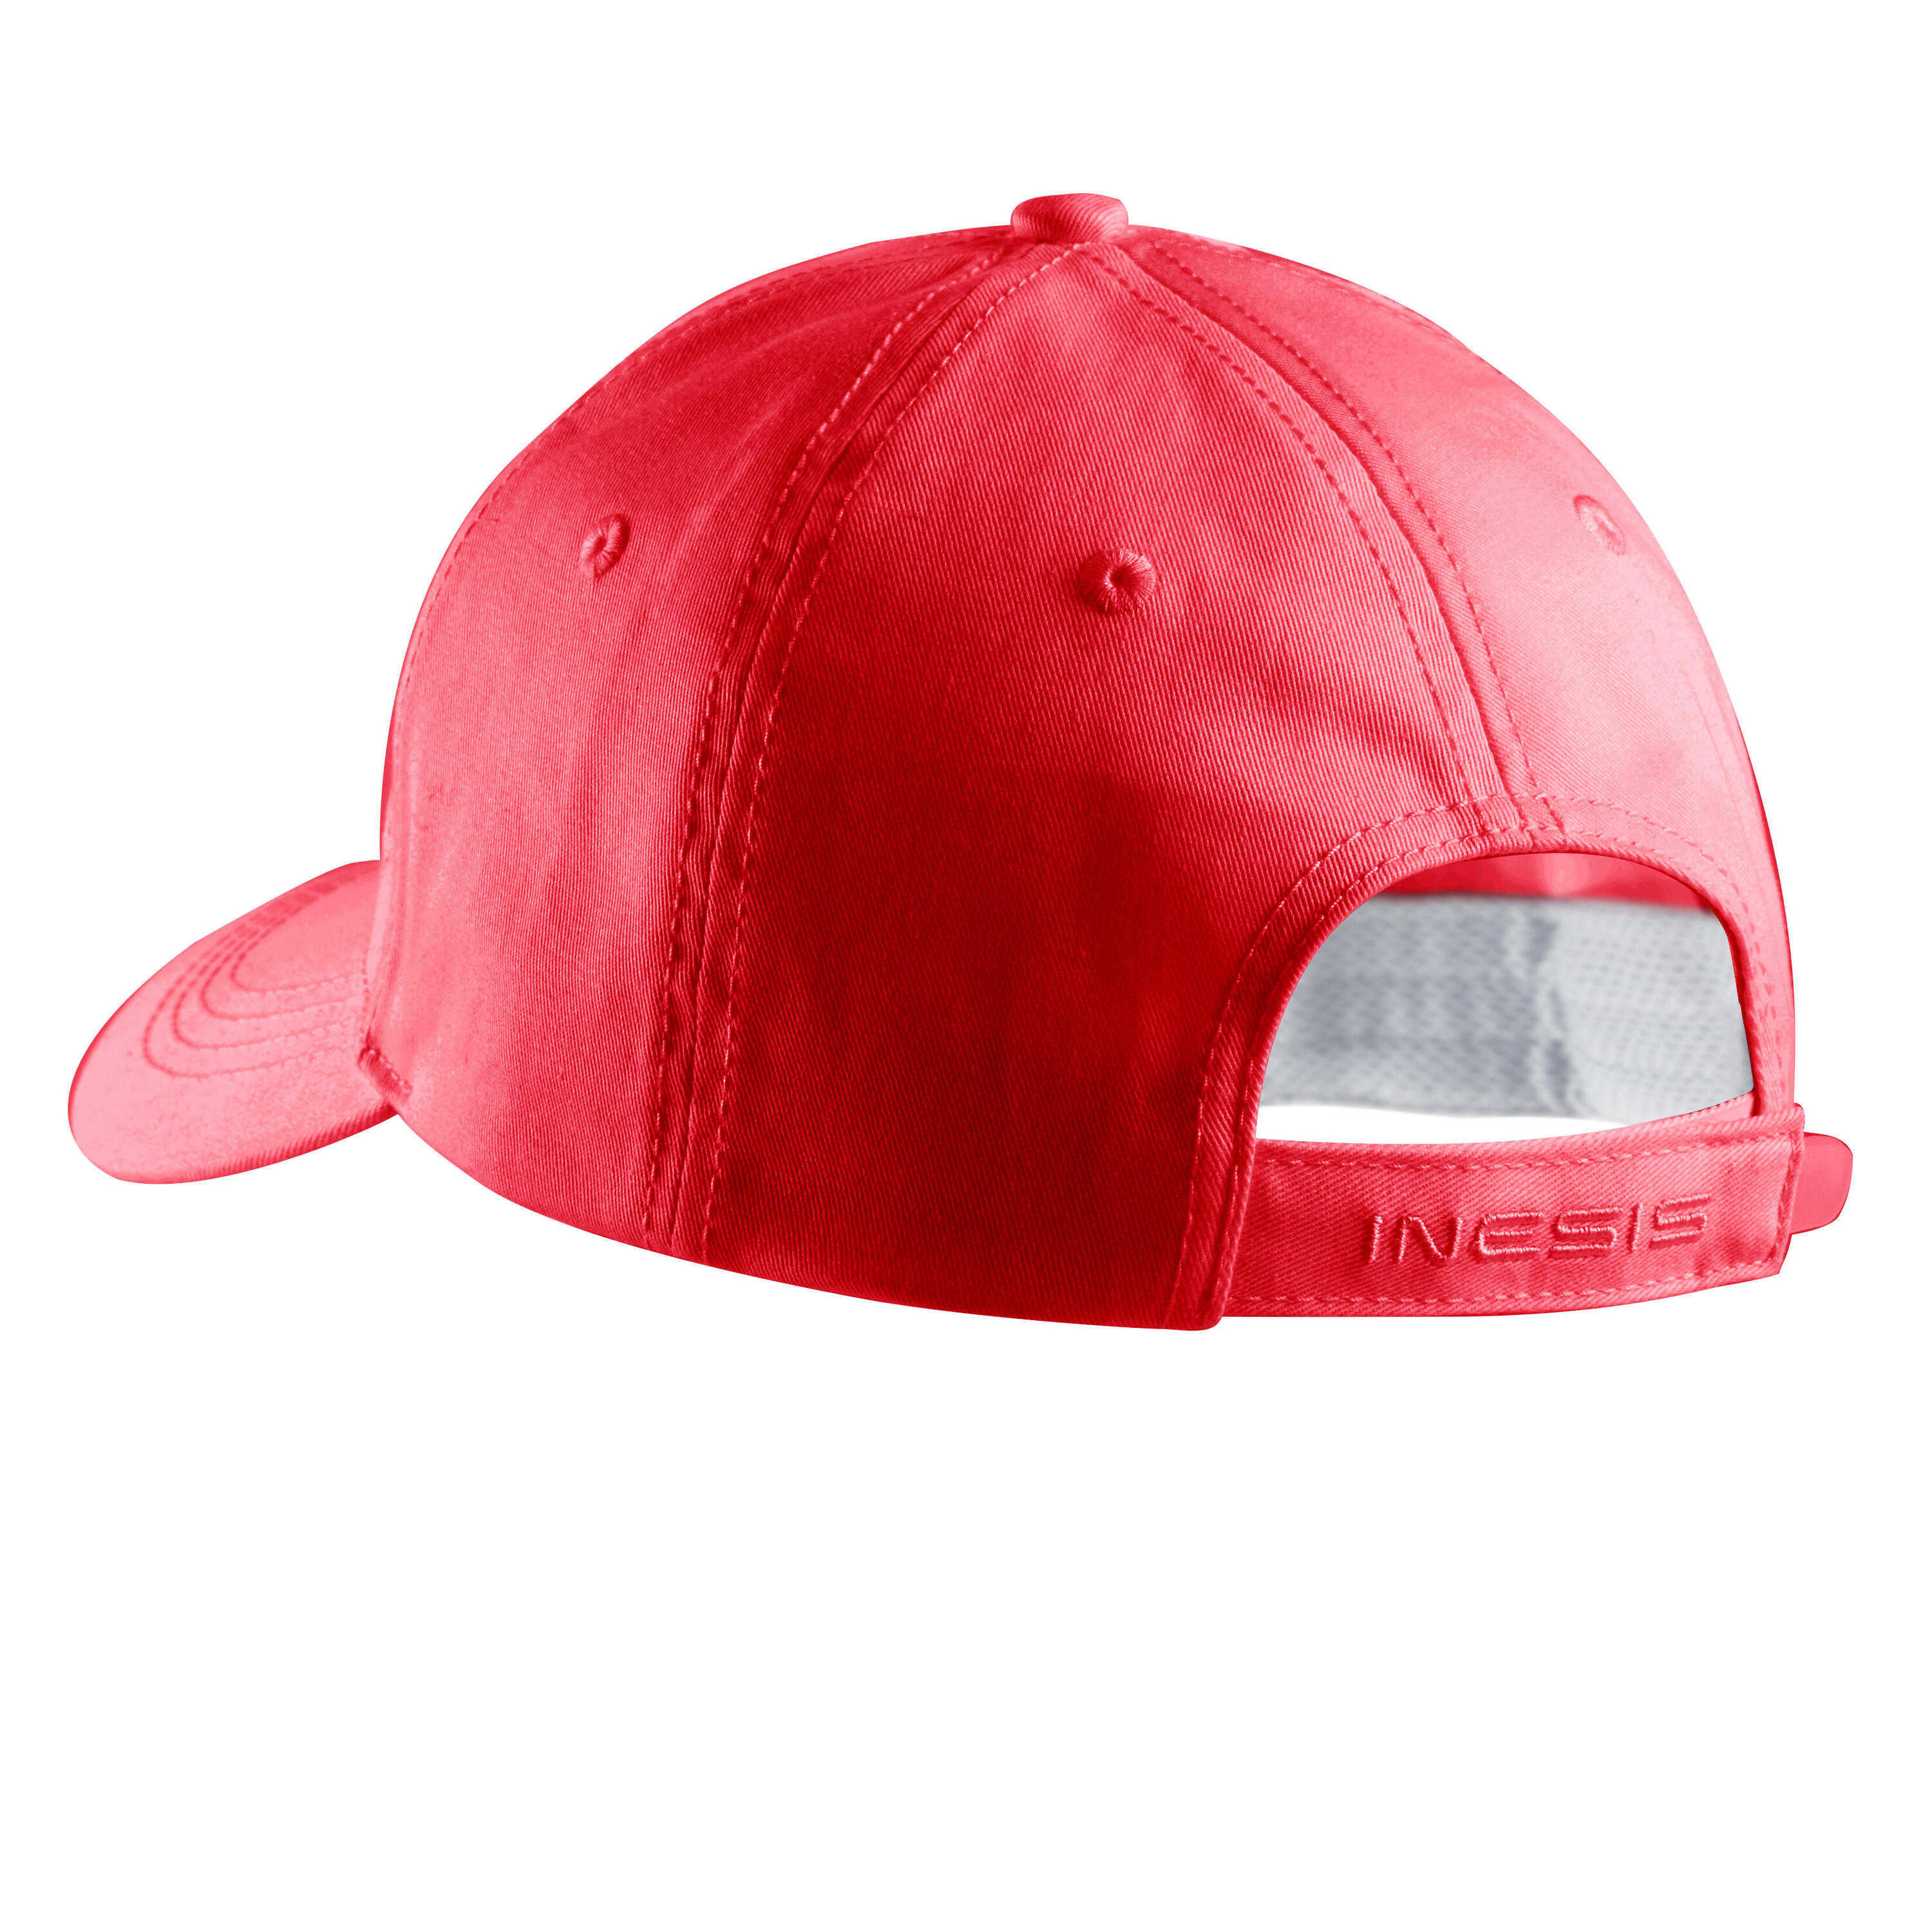 Adult's golf cap - MW 500 red 3/3